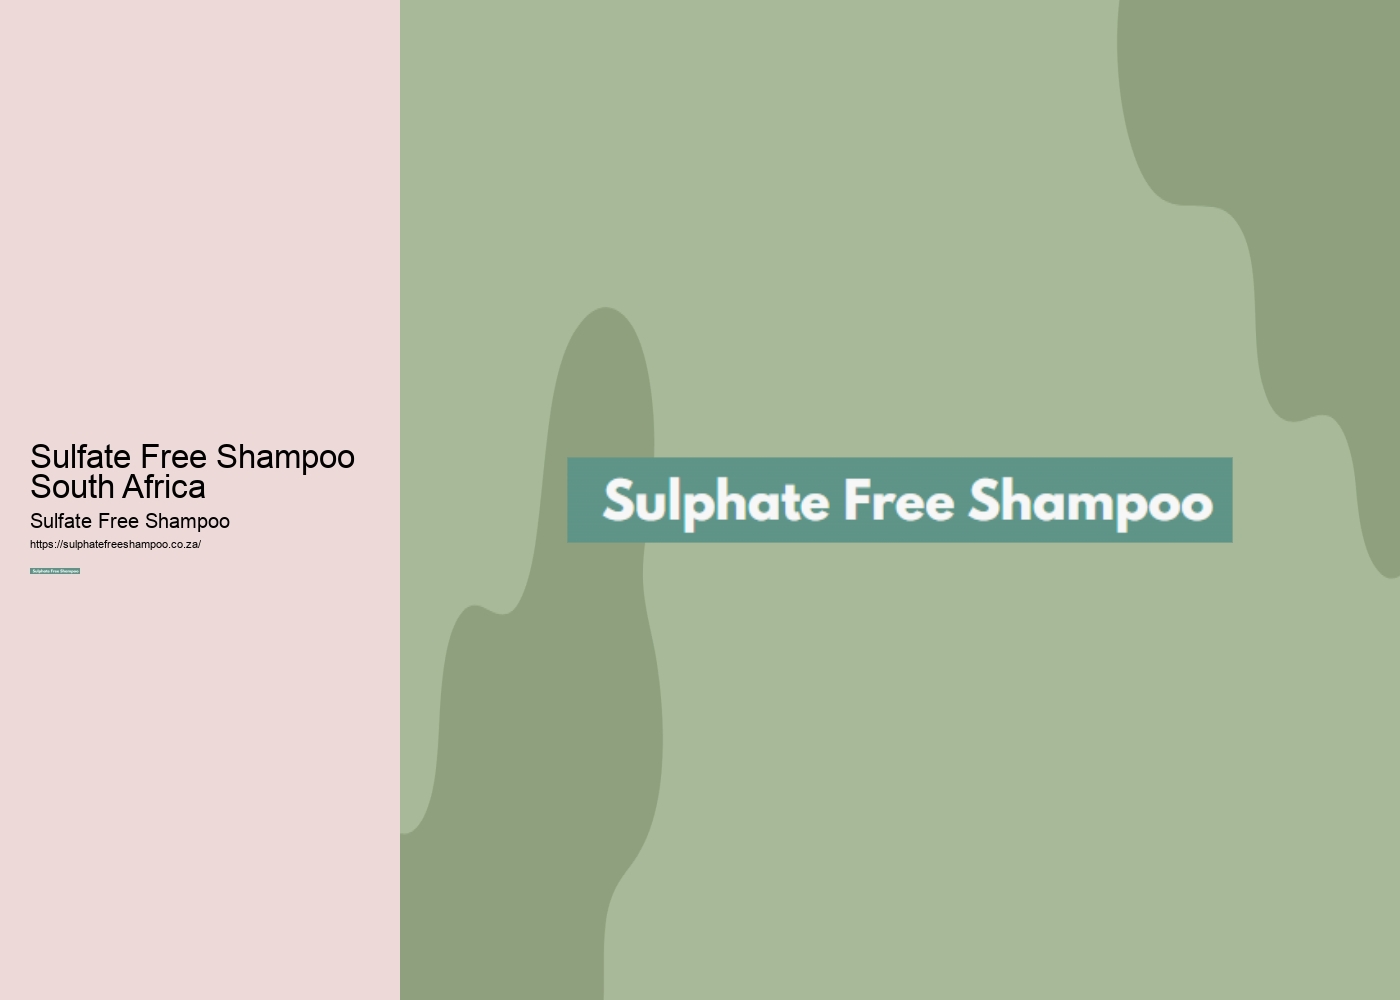 Sulfate Free Shampoo South Africa